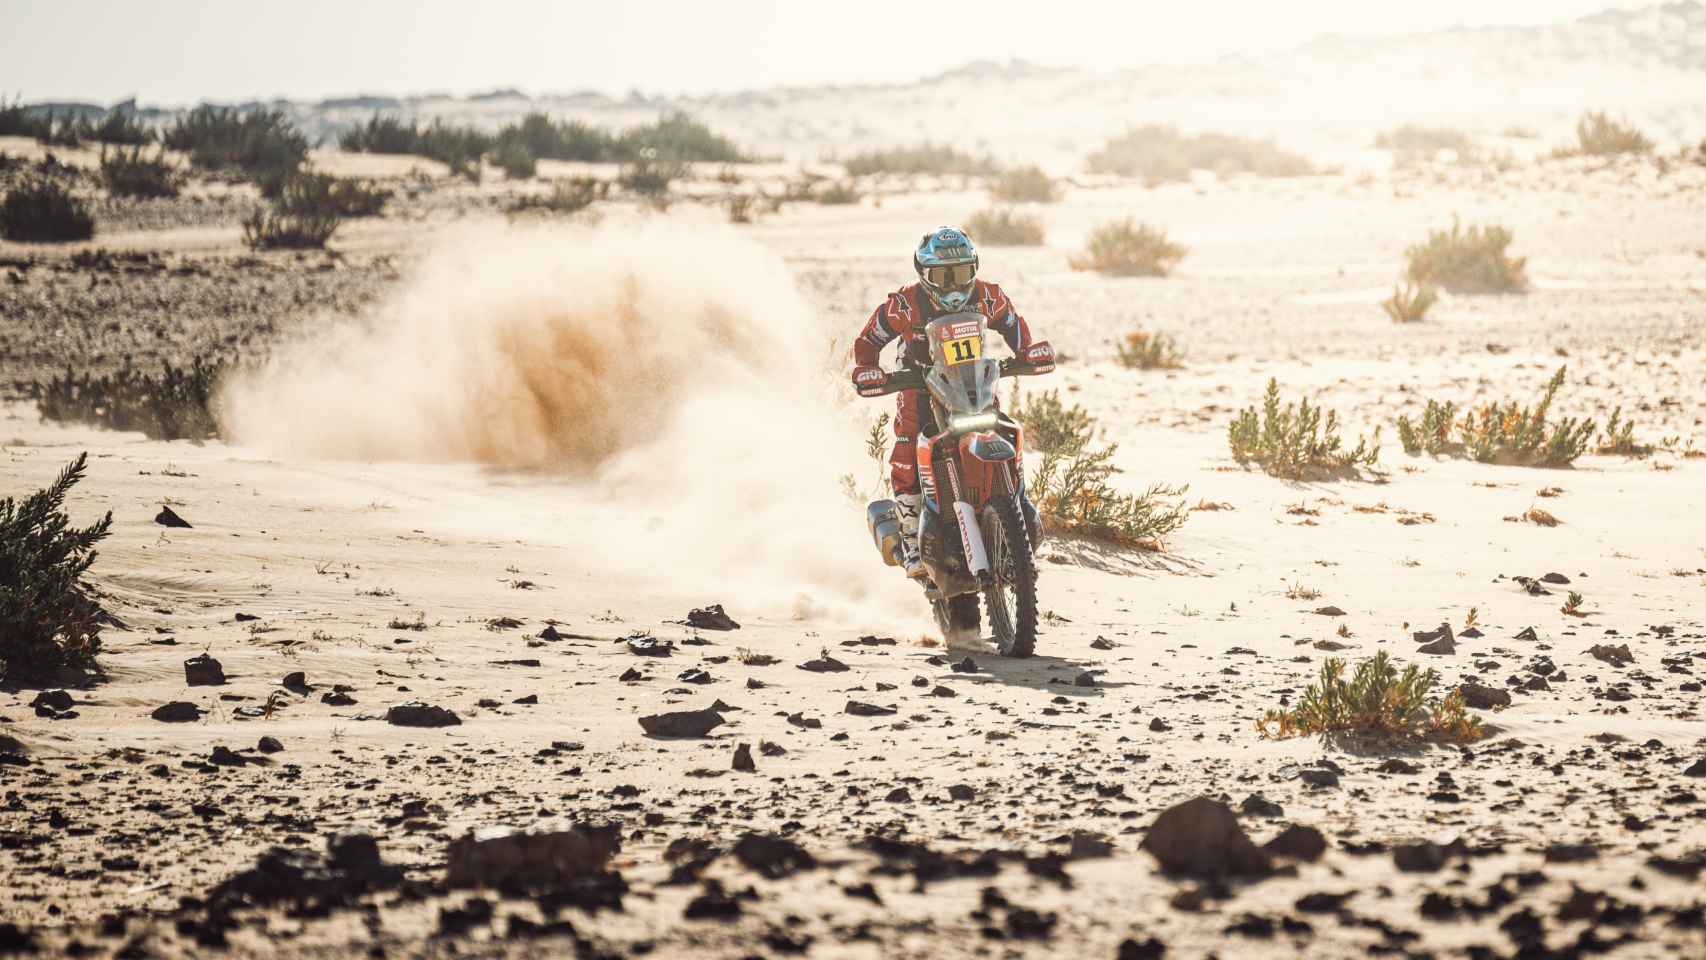 Un piloto de motos durante una etapa del Rally Dakar.